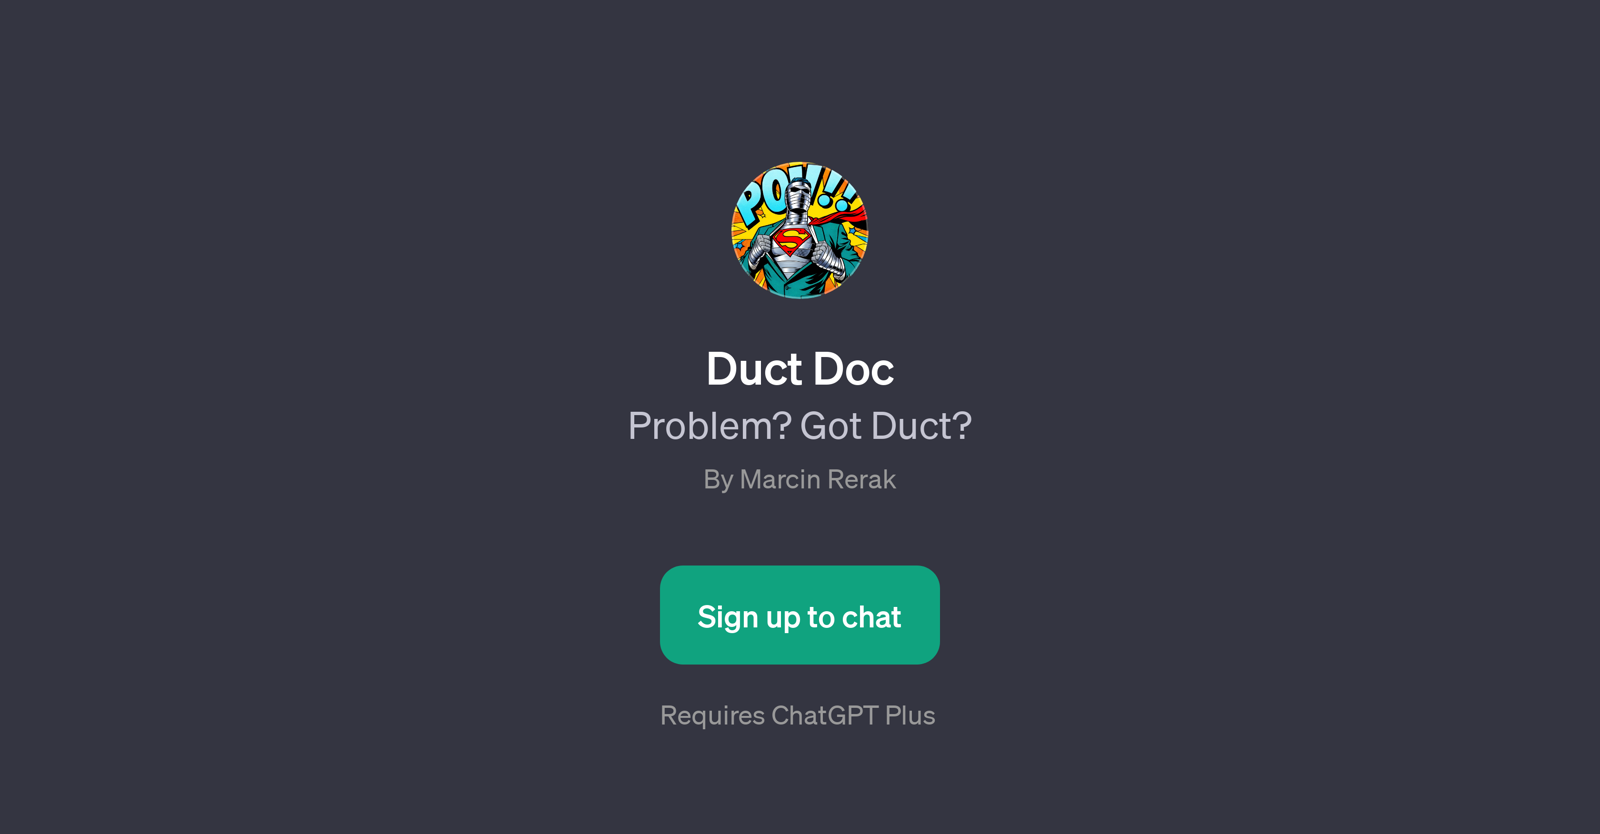 Duct Doc website